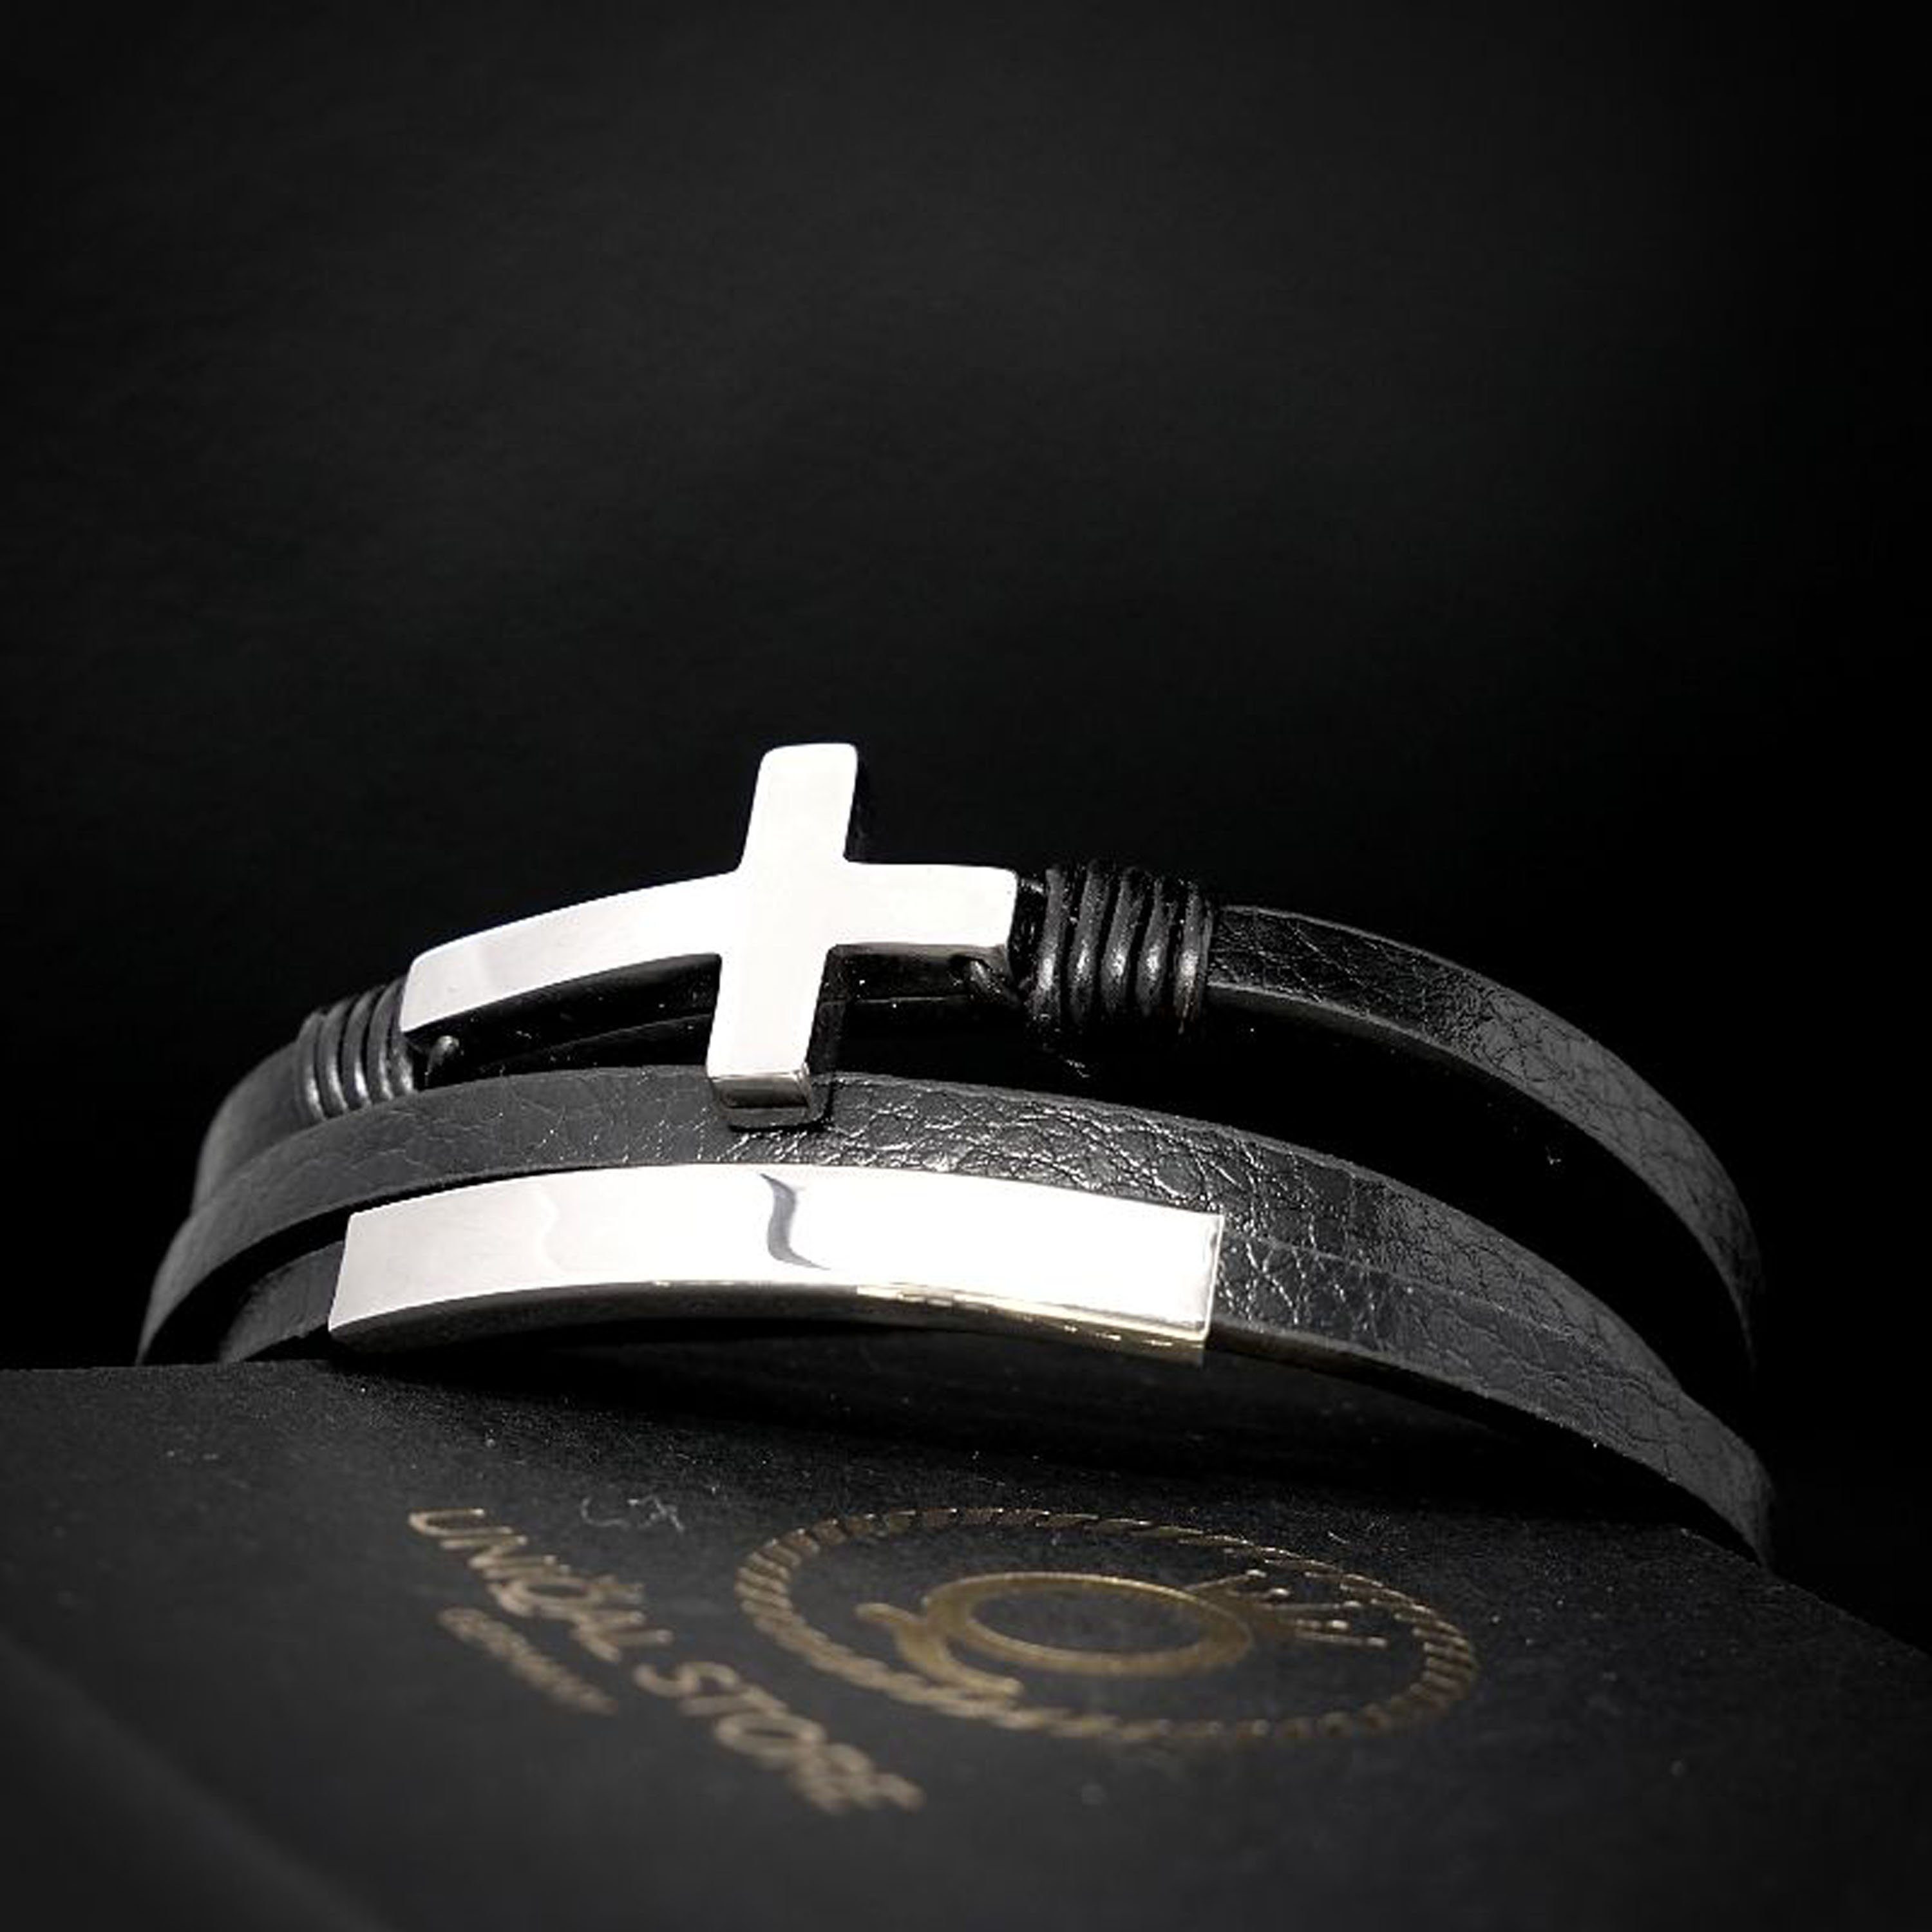 Casual plate.dreilägig Kreuz "CHURCH" Style, Silber Lederarmband (Edelstahl, mit Echtleder, Herren Lederarmband Handgefertigt) UNIQAL.de cross,